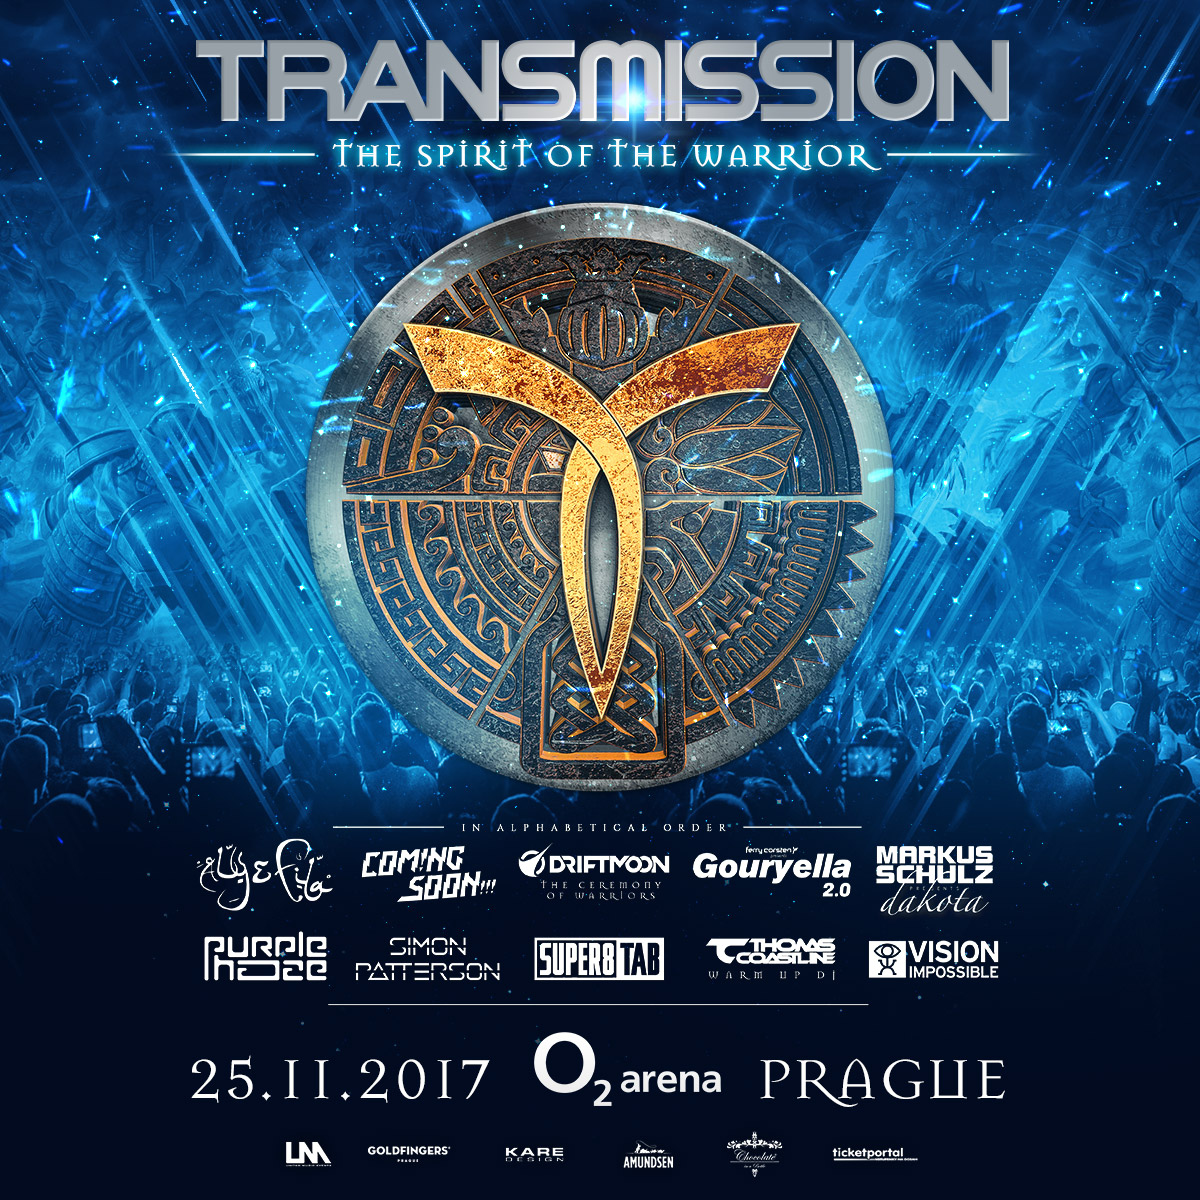 Transmission 2017